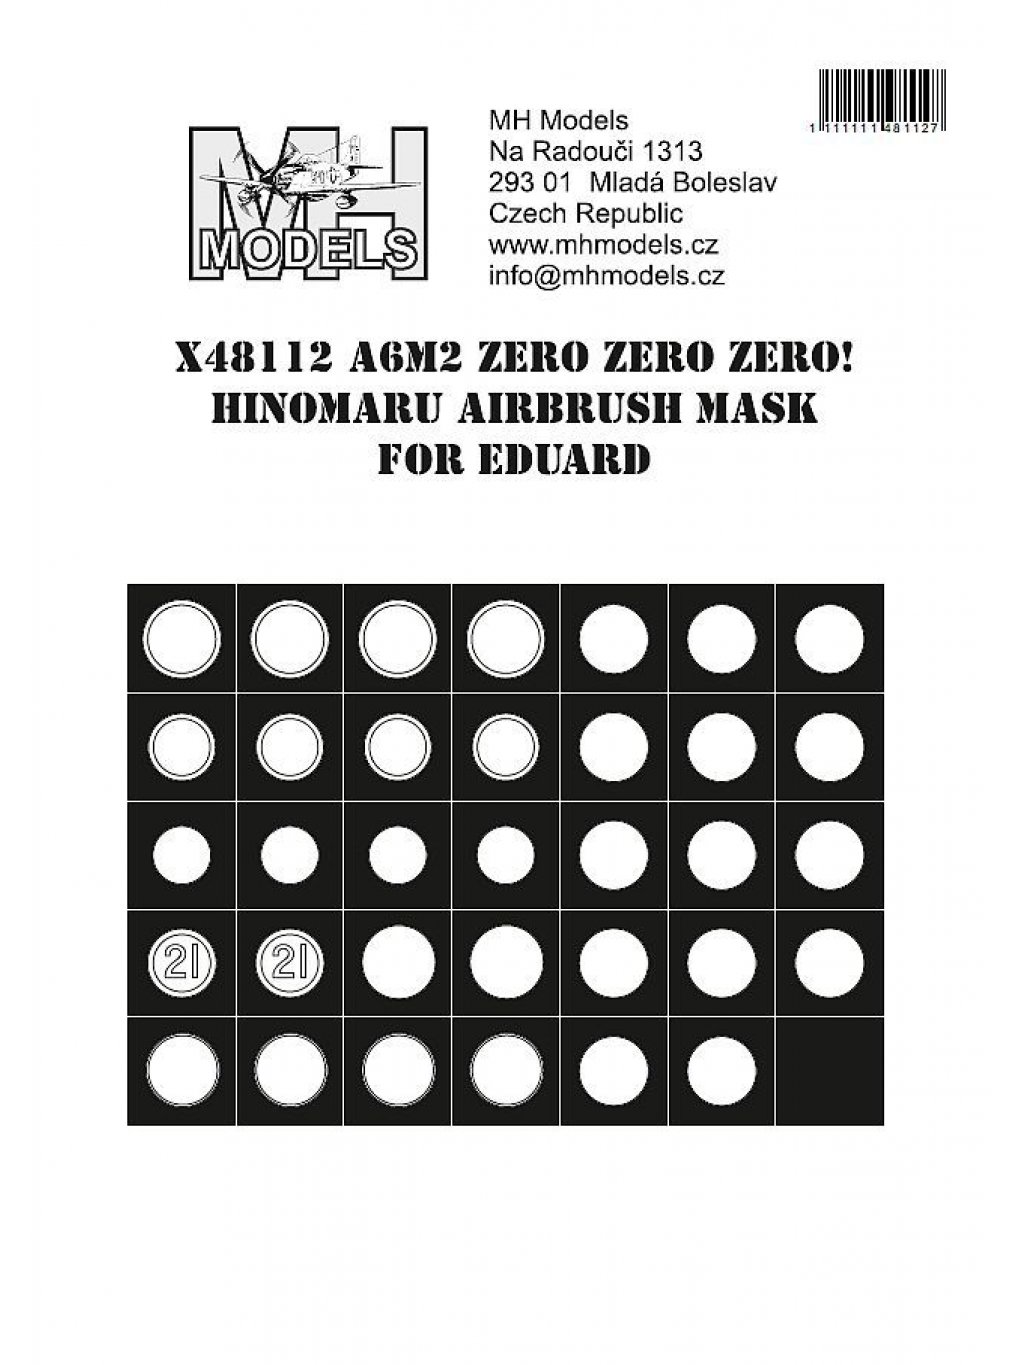 A6M2 Zero Zero Zero! Hinomaru airbrush mask for Eduard